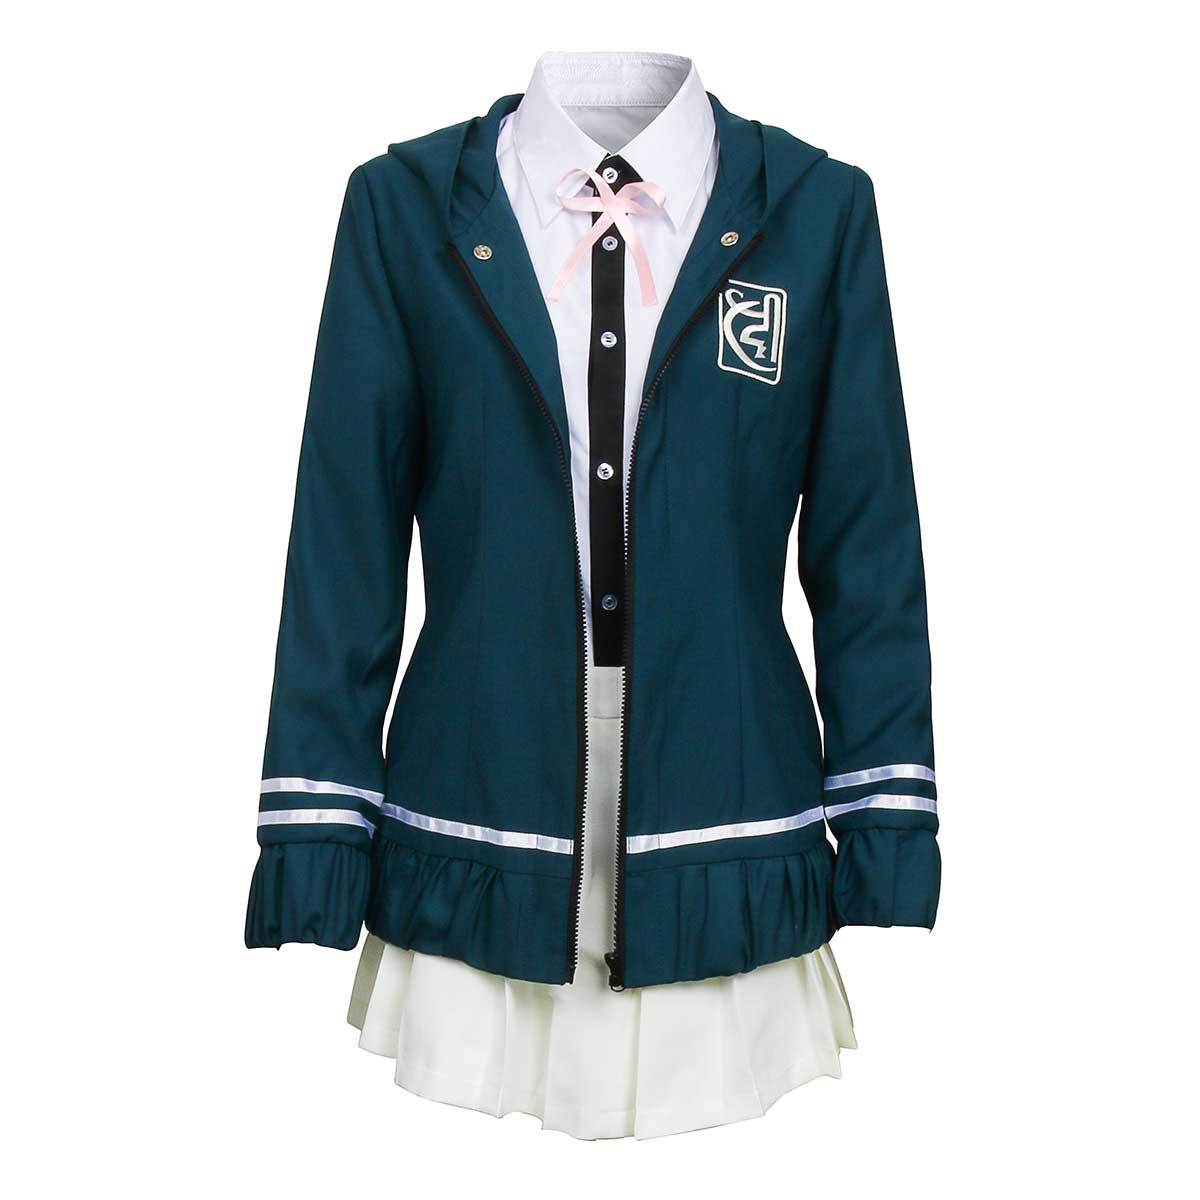 Cosplay Female High School Chiaki Nanami Cosplay Outfit Uniform Dress Green